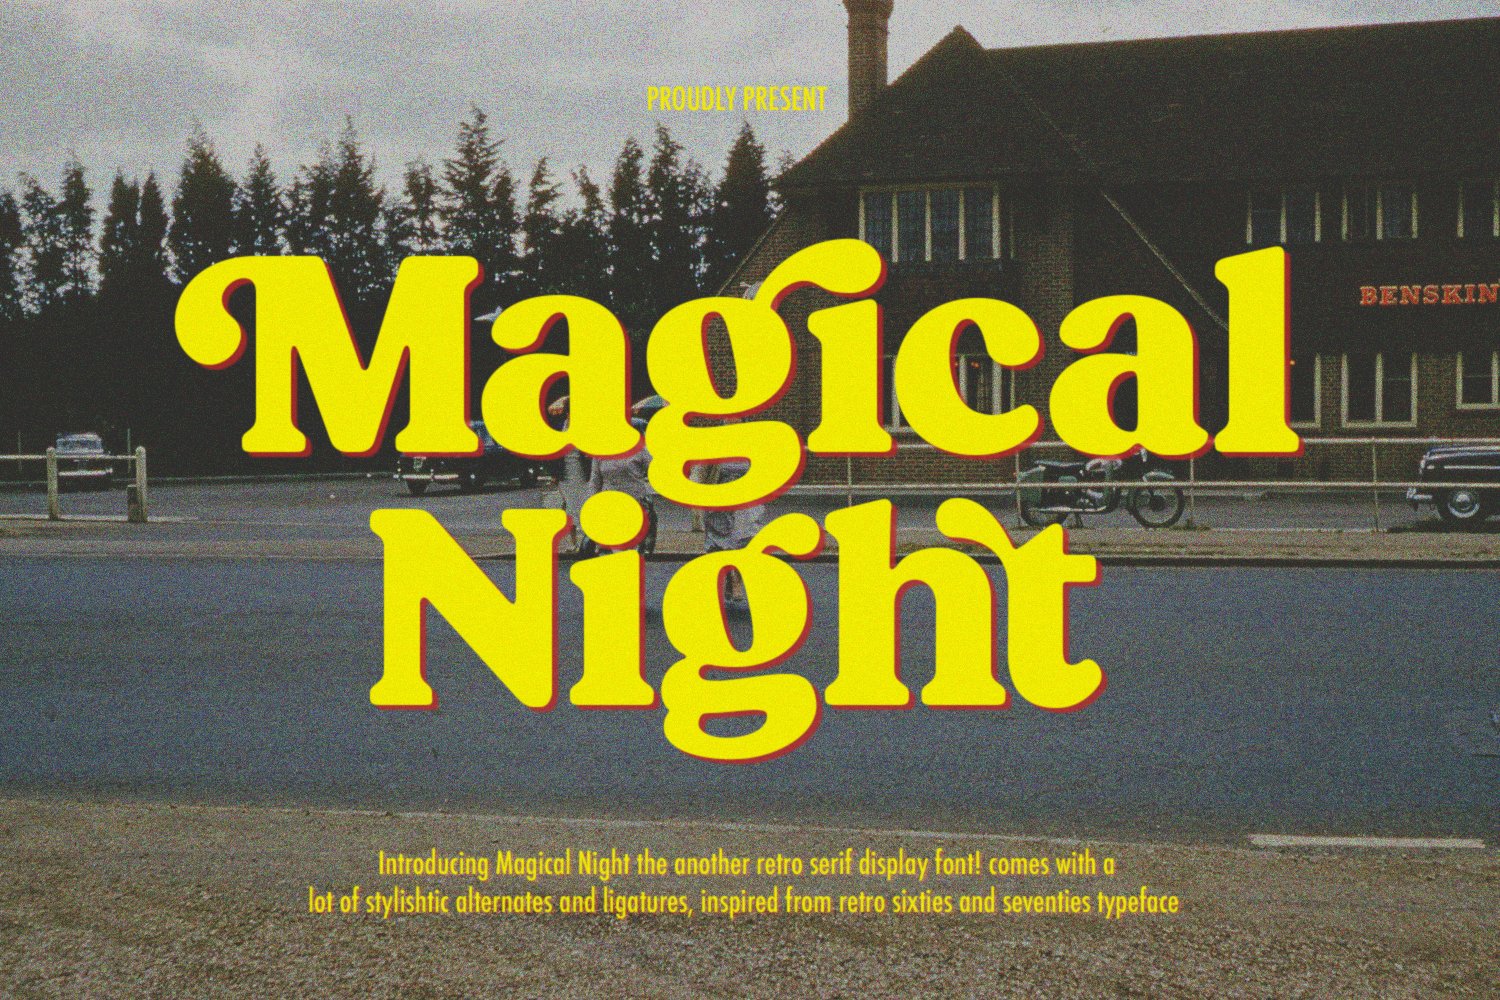 Magical Night - Retro Serif cover image.